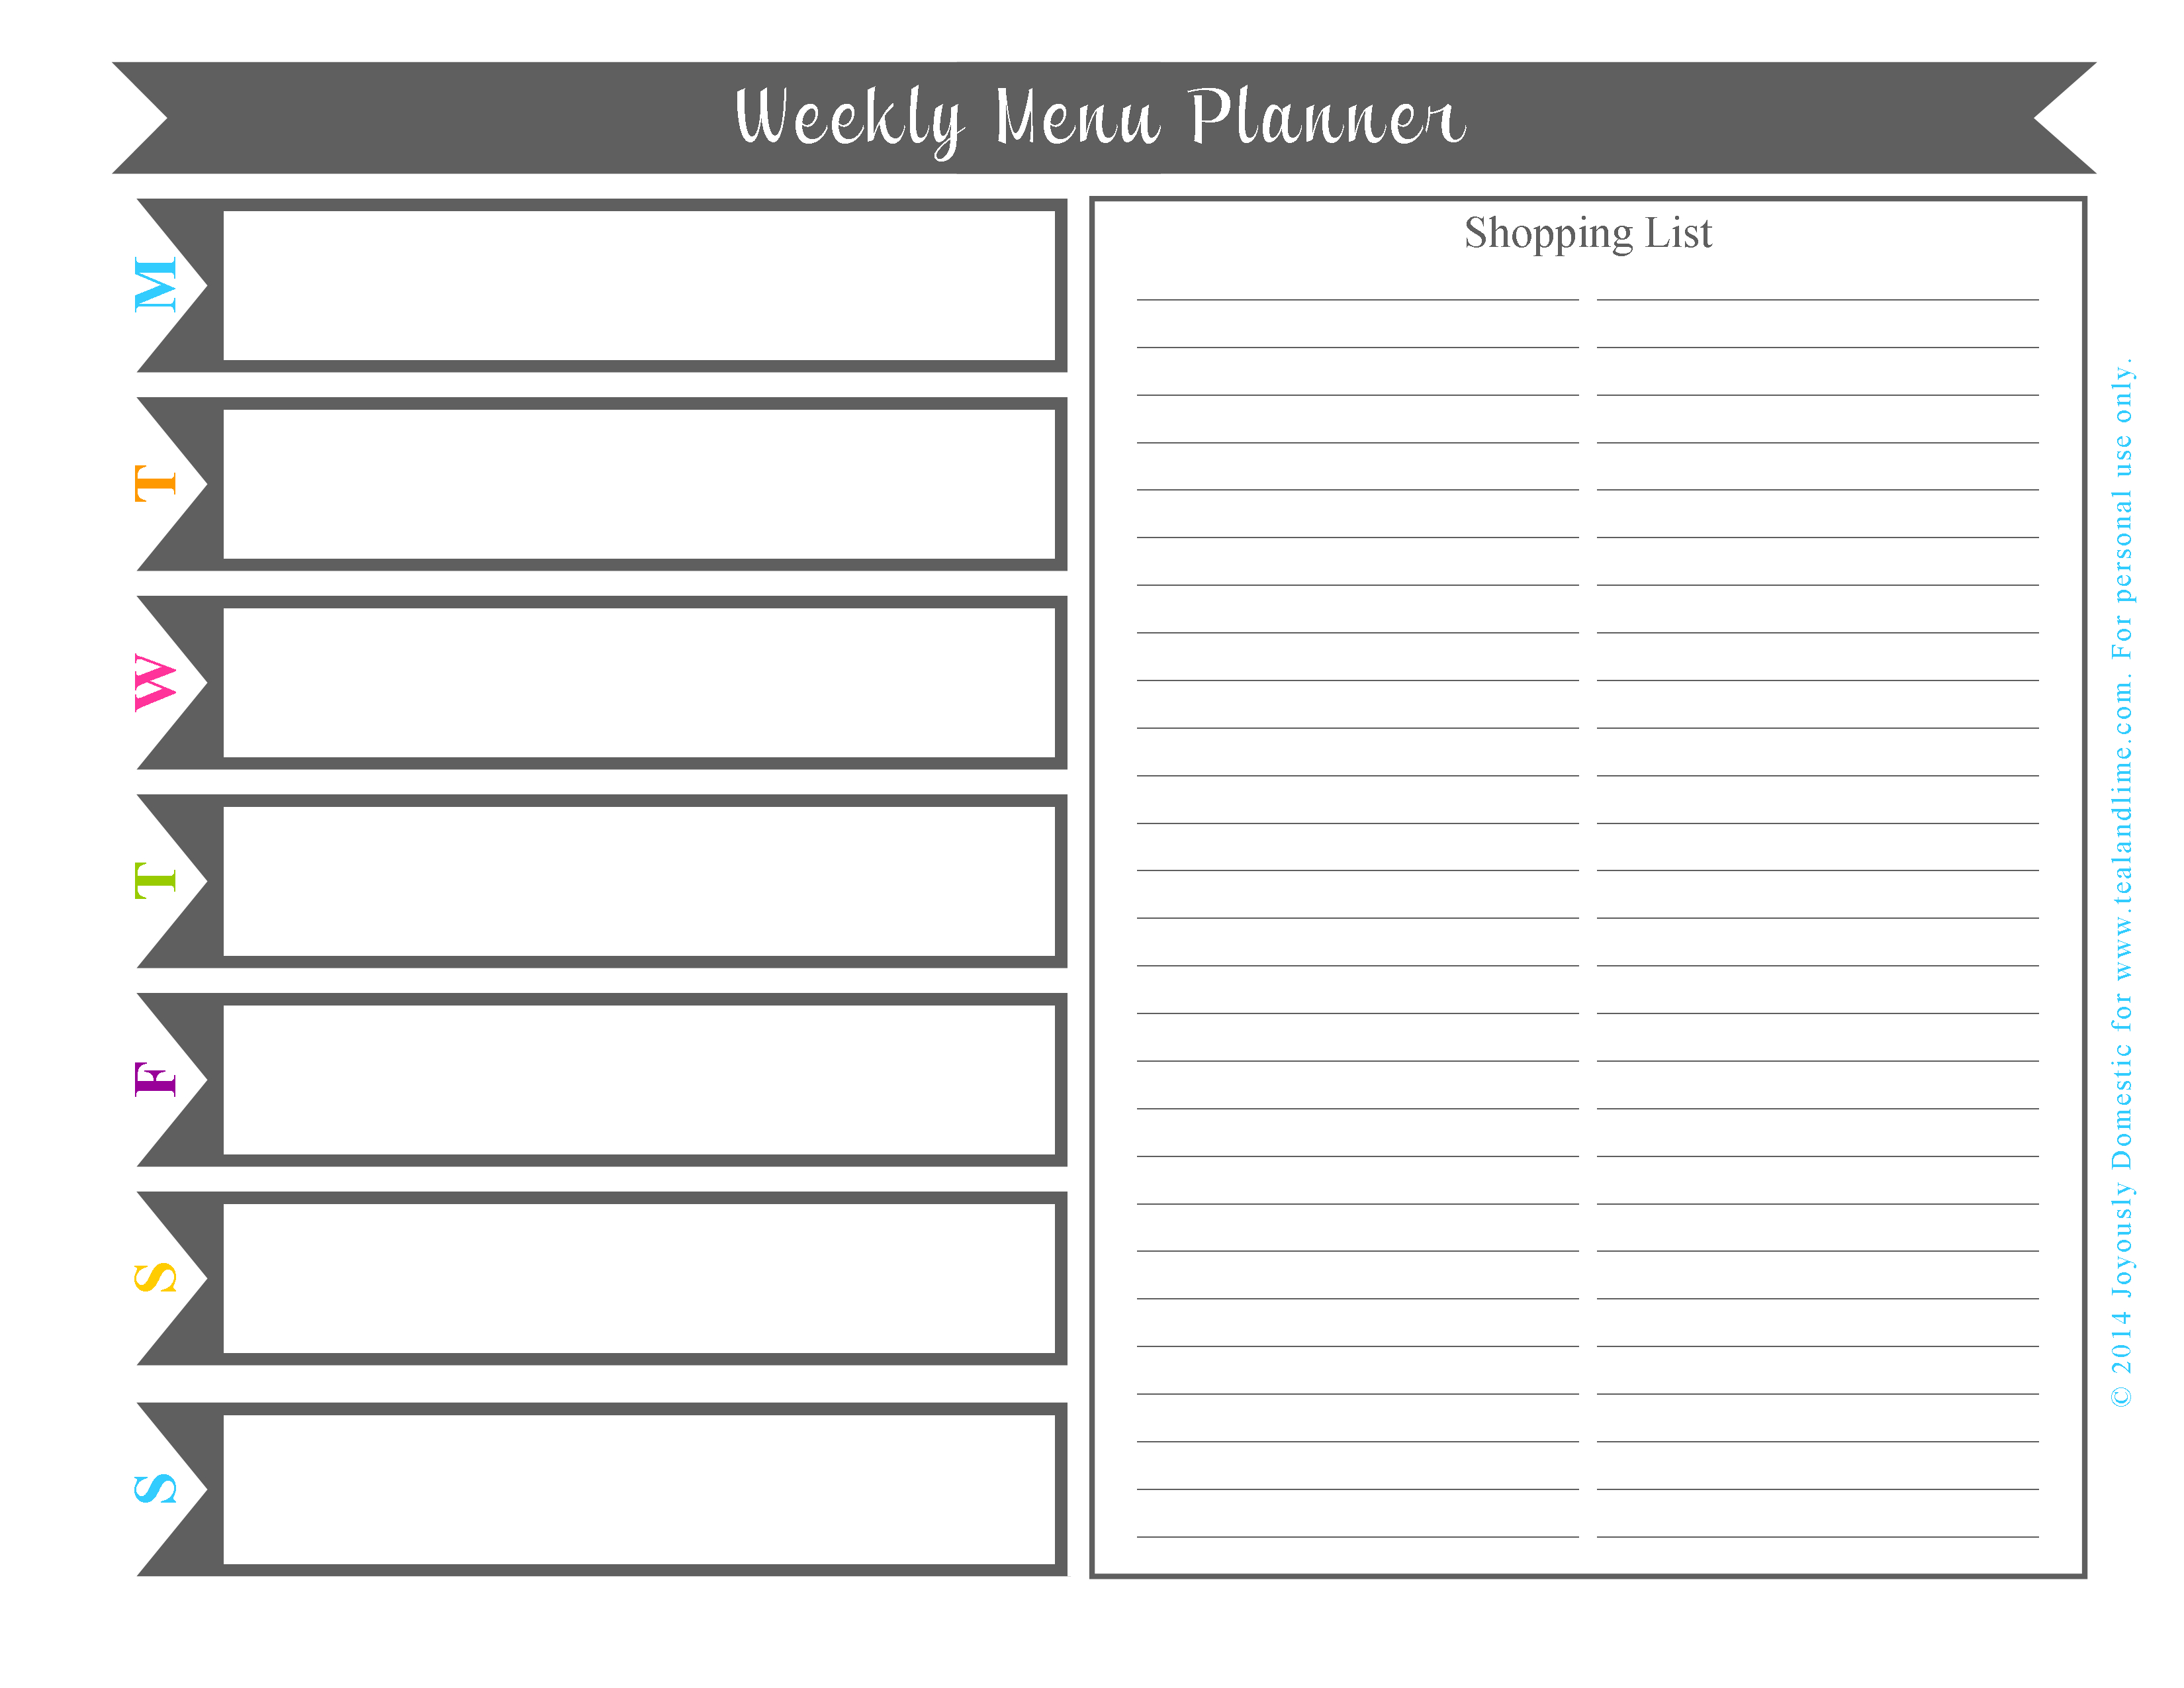 Plan Your Weekly Dinner Menu In Under 30 Minutes (Free Printable) - Weekly Menu Free Printable